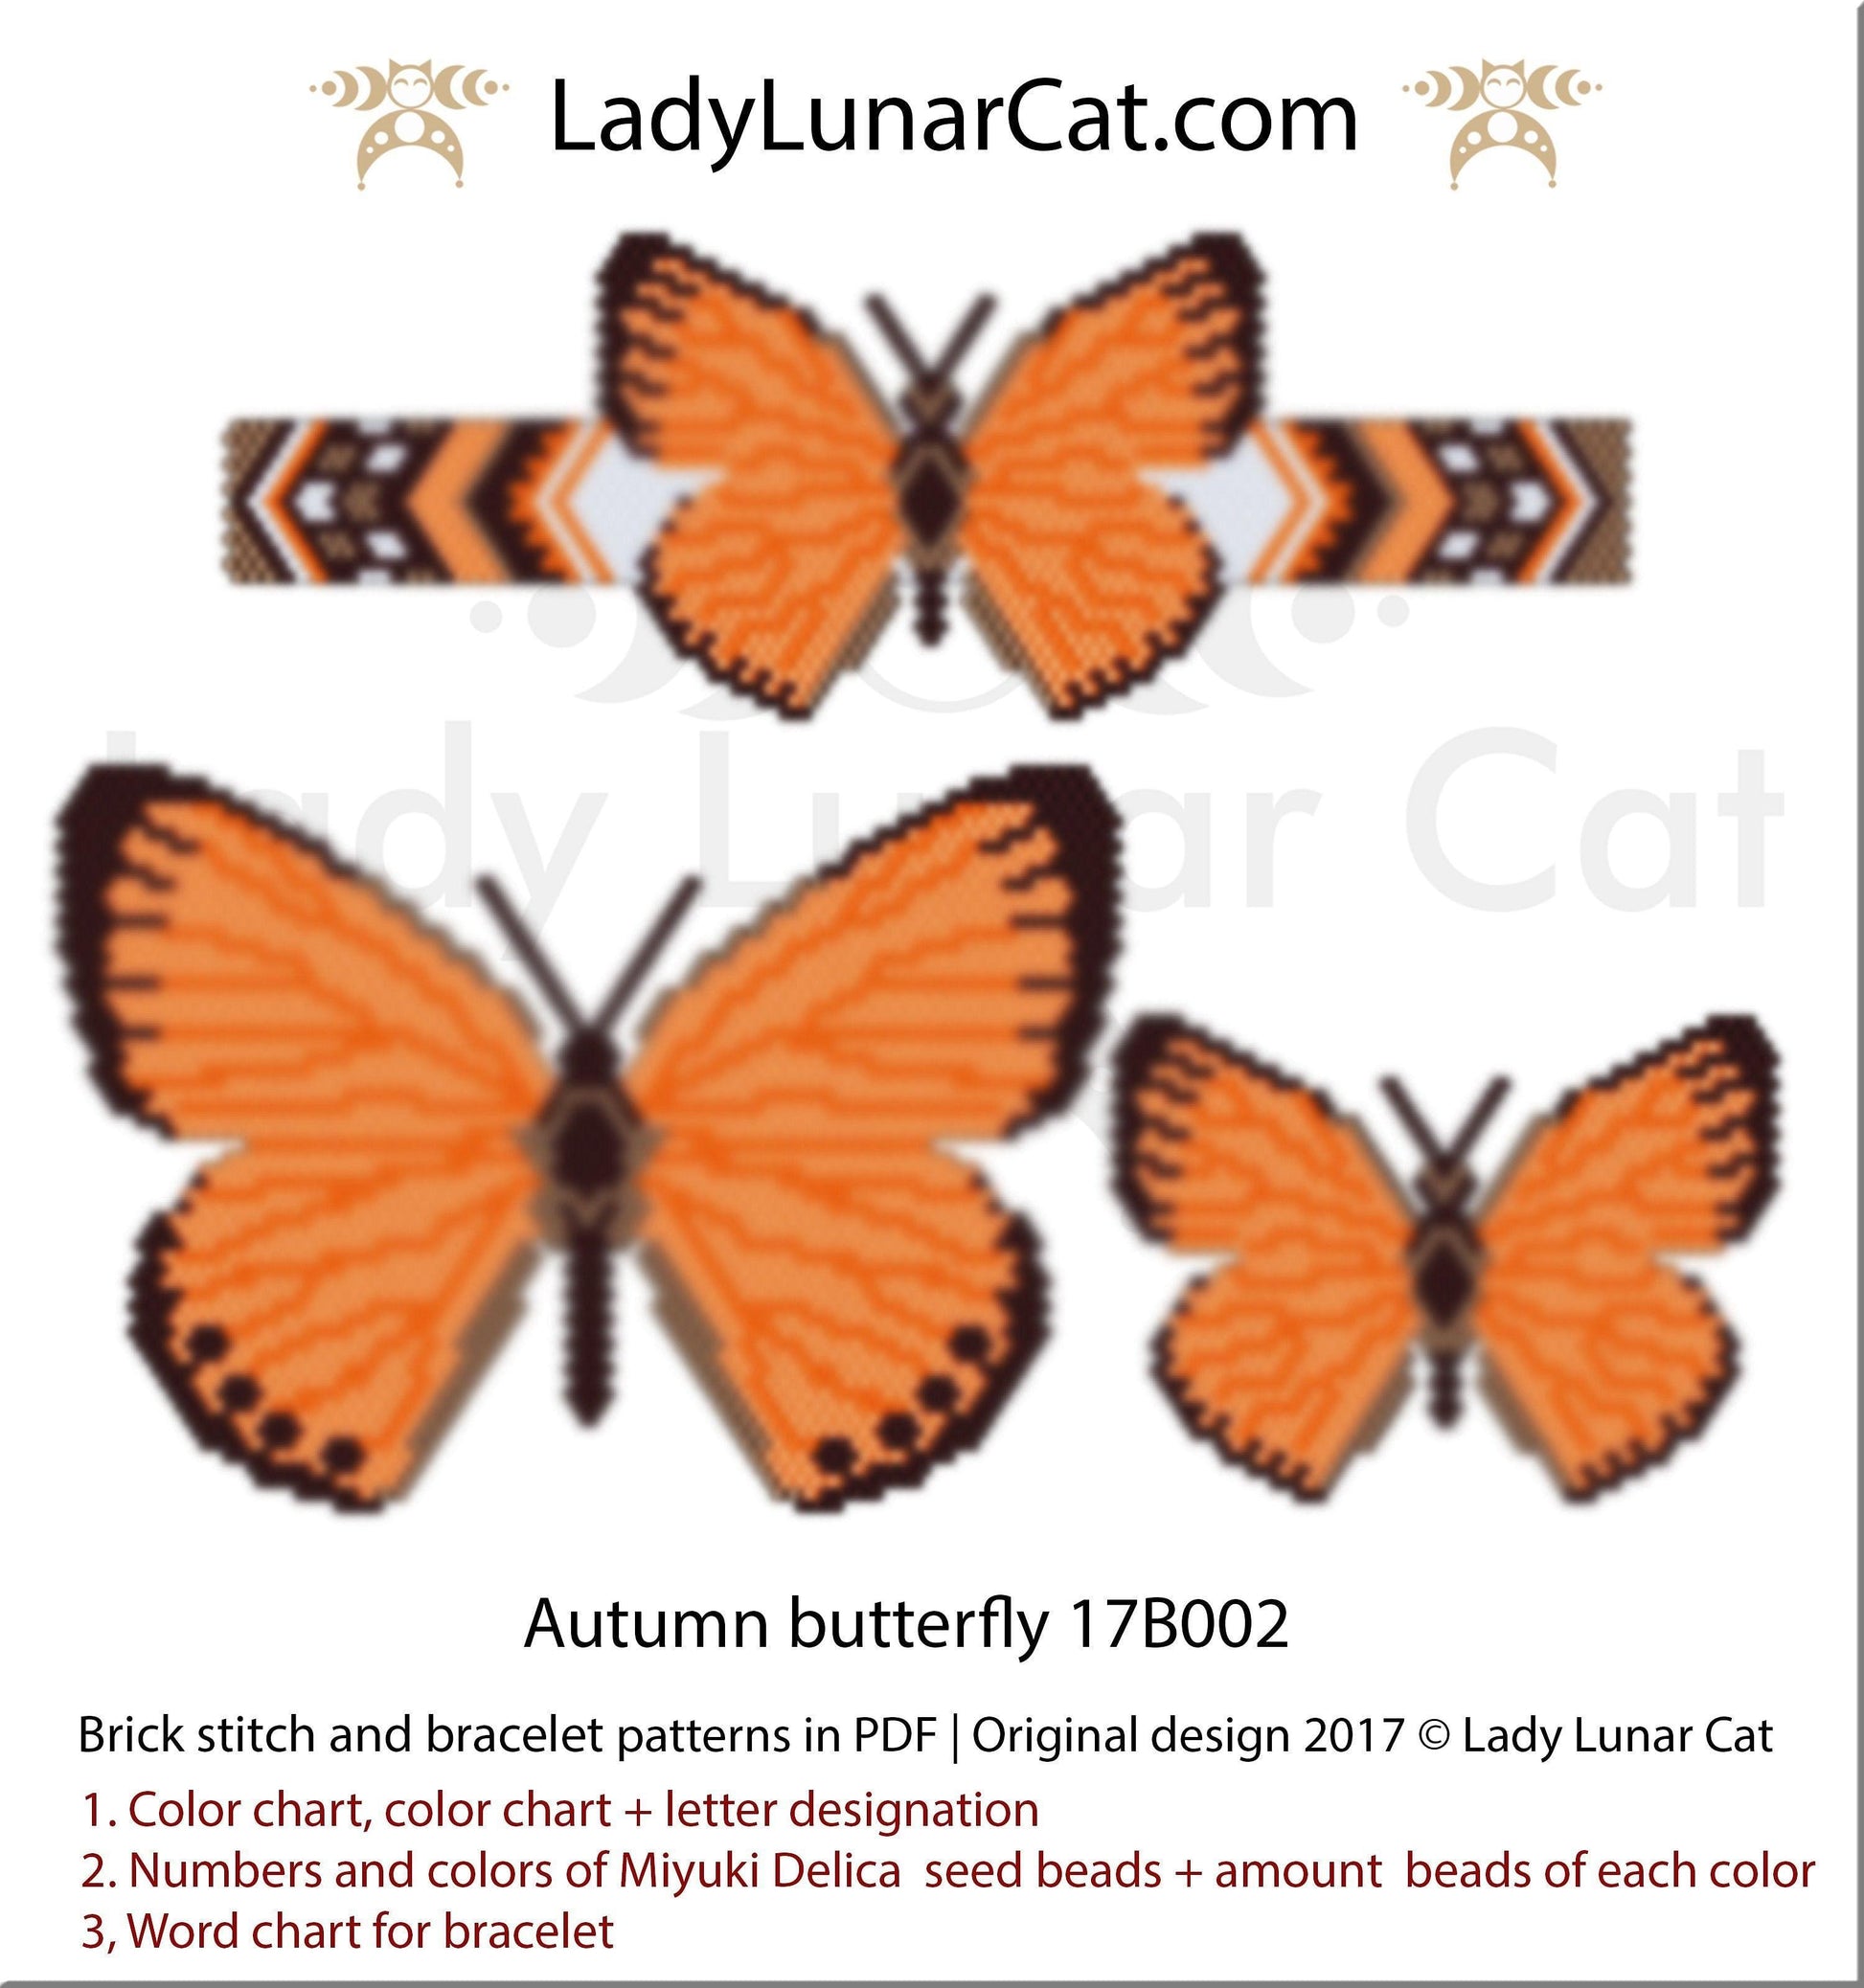 Brick stitch patterns for beading Autumn butterfly set 17B002 LadyLunarCat